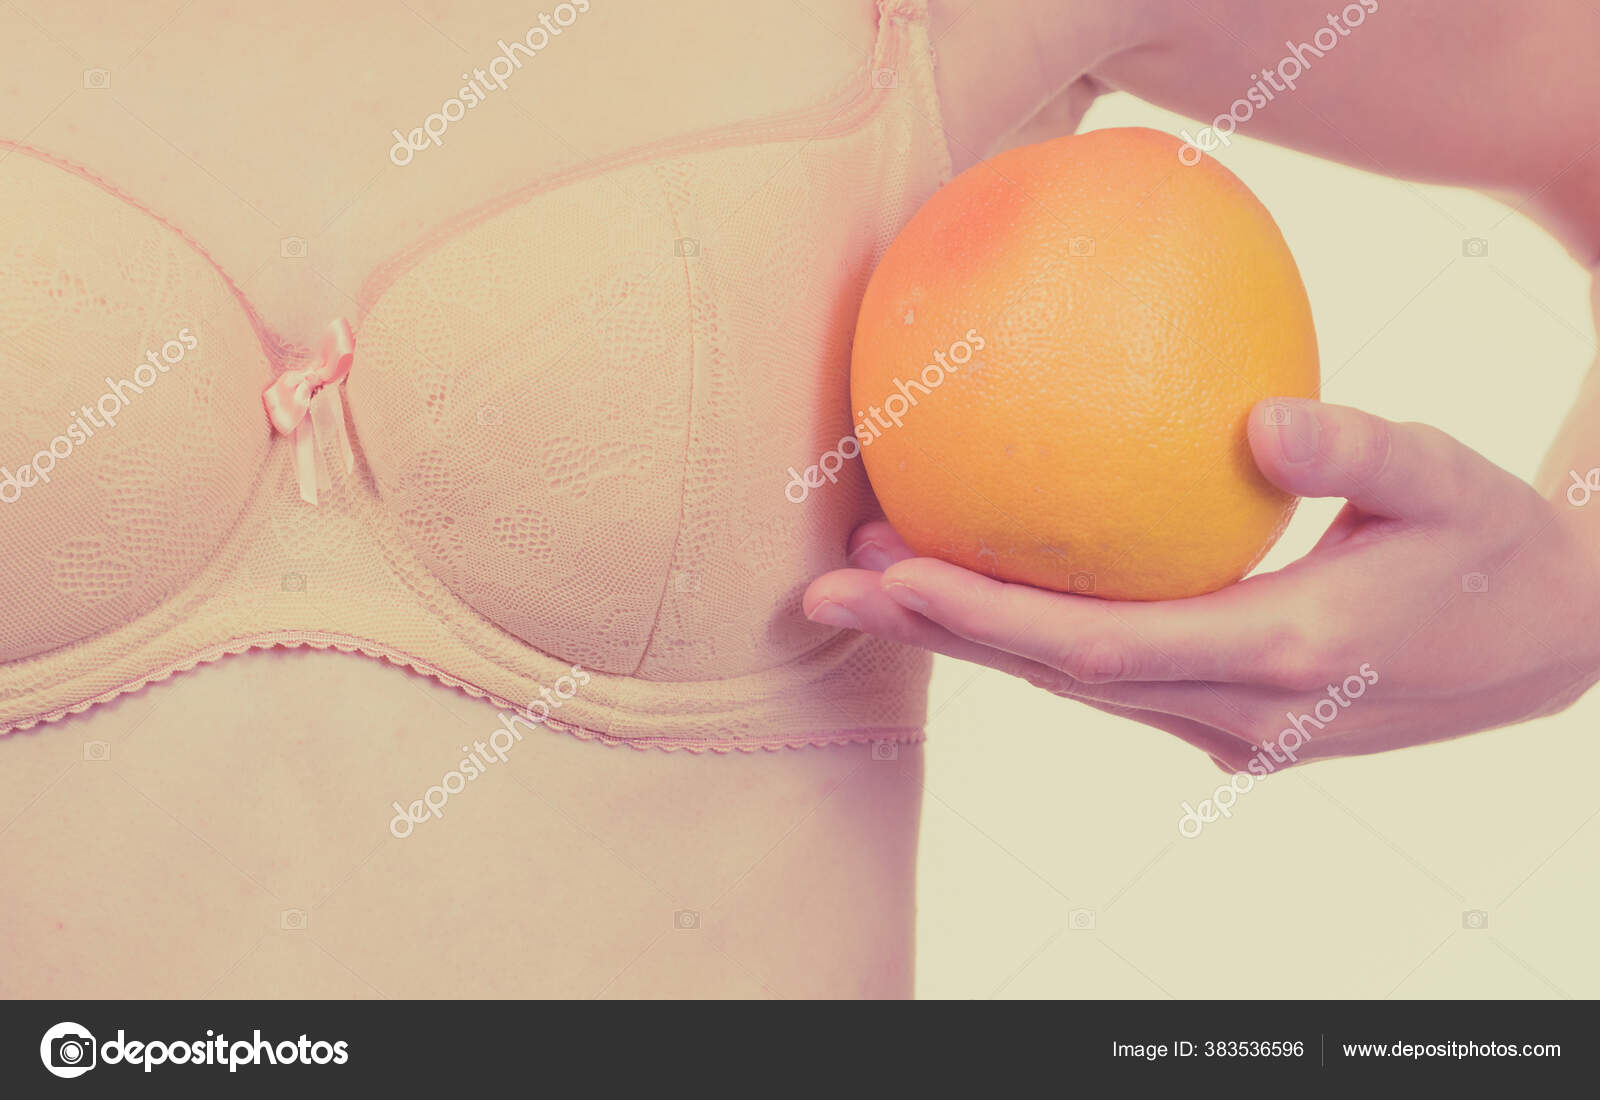 Young Woman Small Boobs Puts Big Fruit Grapefruit Her Bra Stock